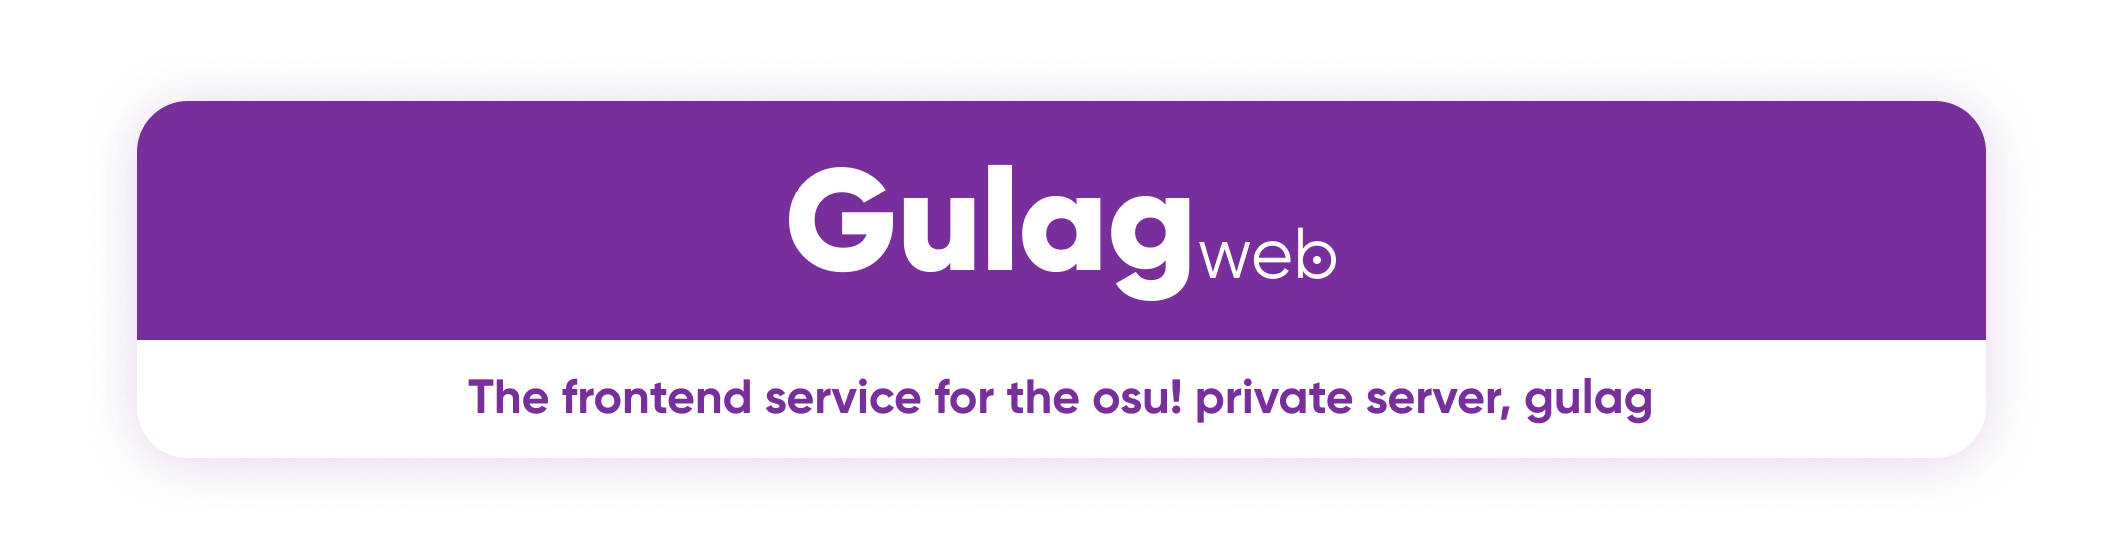 gulag-web